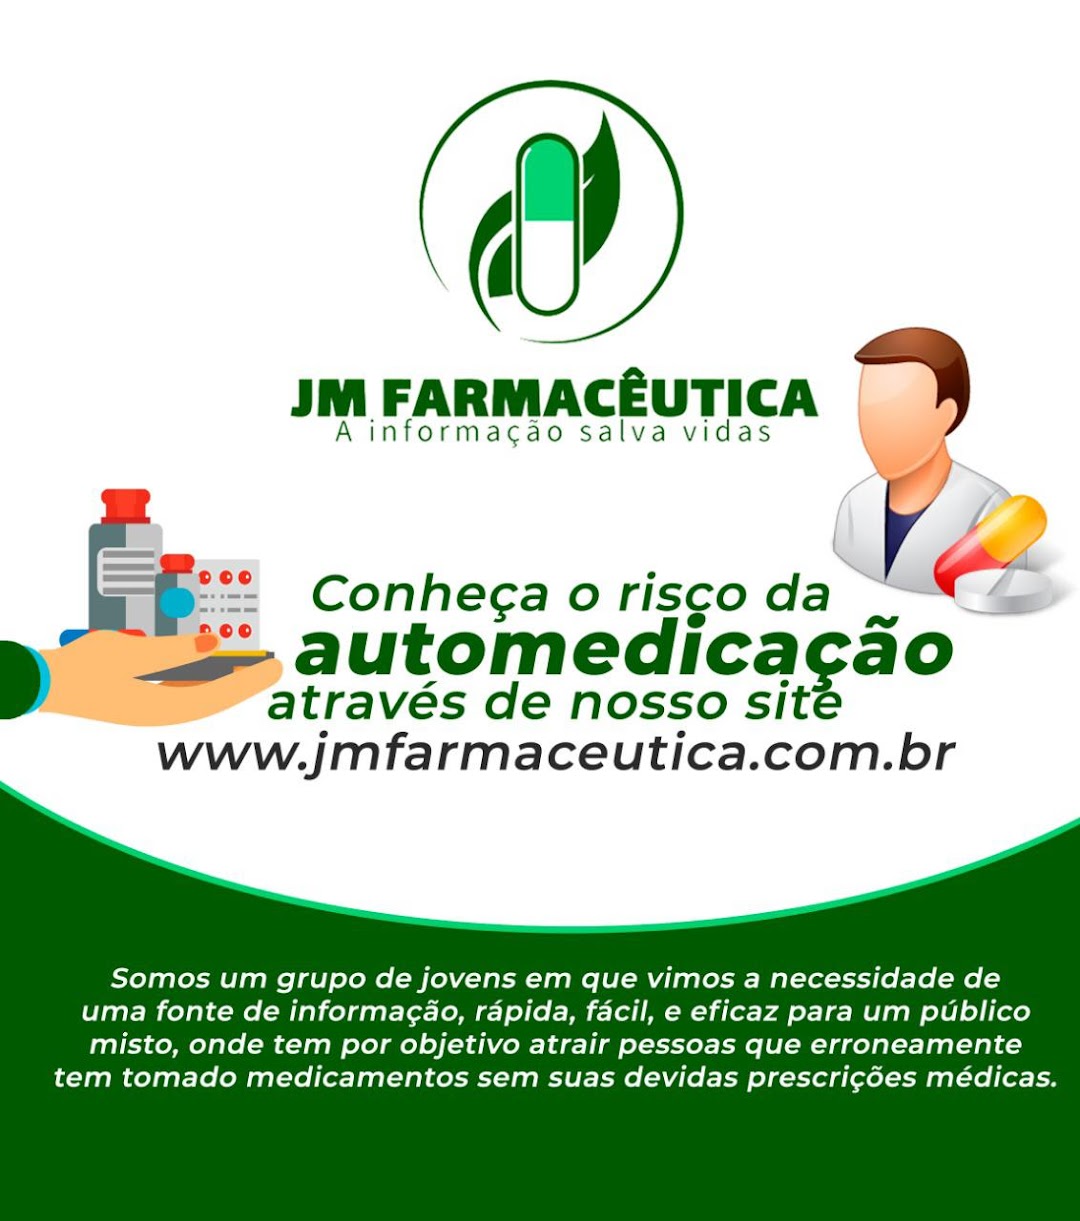 JM Farmacêutica